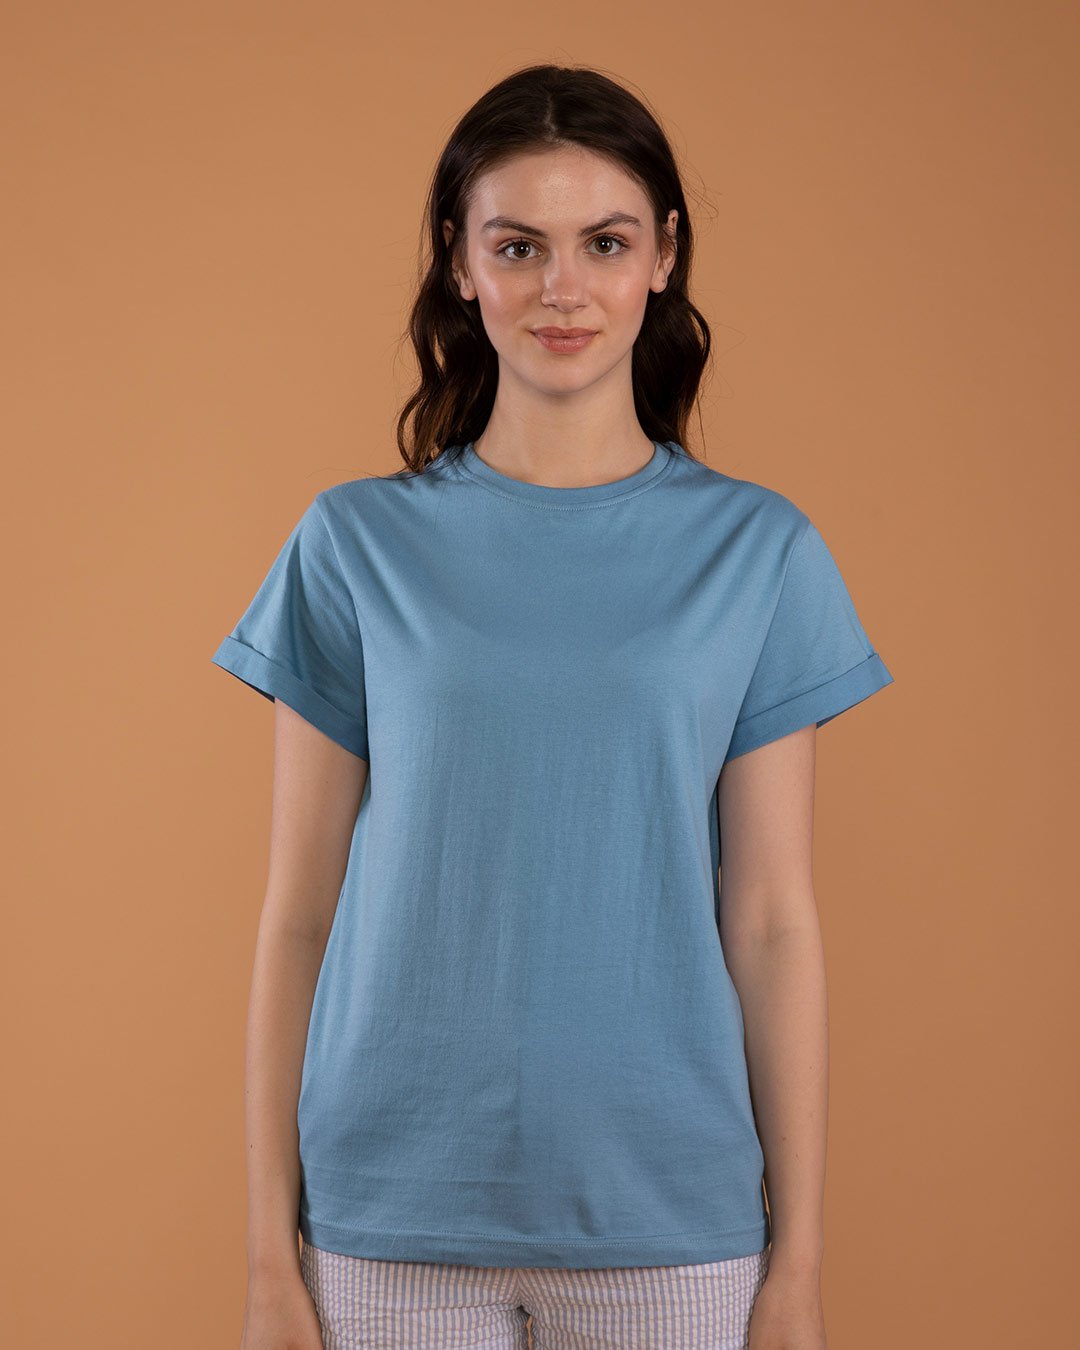 island-blue-boyfriend-t-shirt-women-s-plain-boyfriend-t-shirts-209193-1548942557 for her Island Blue